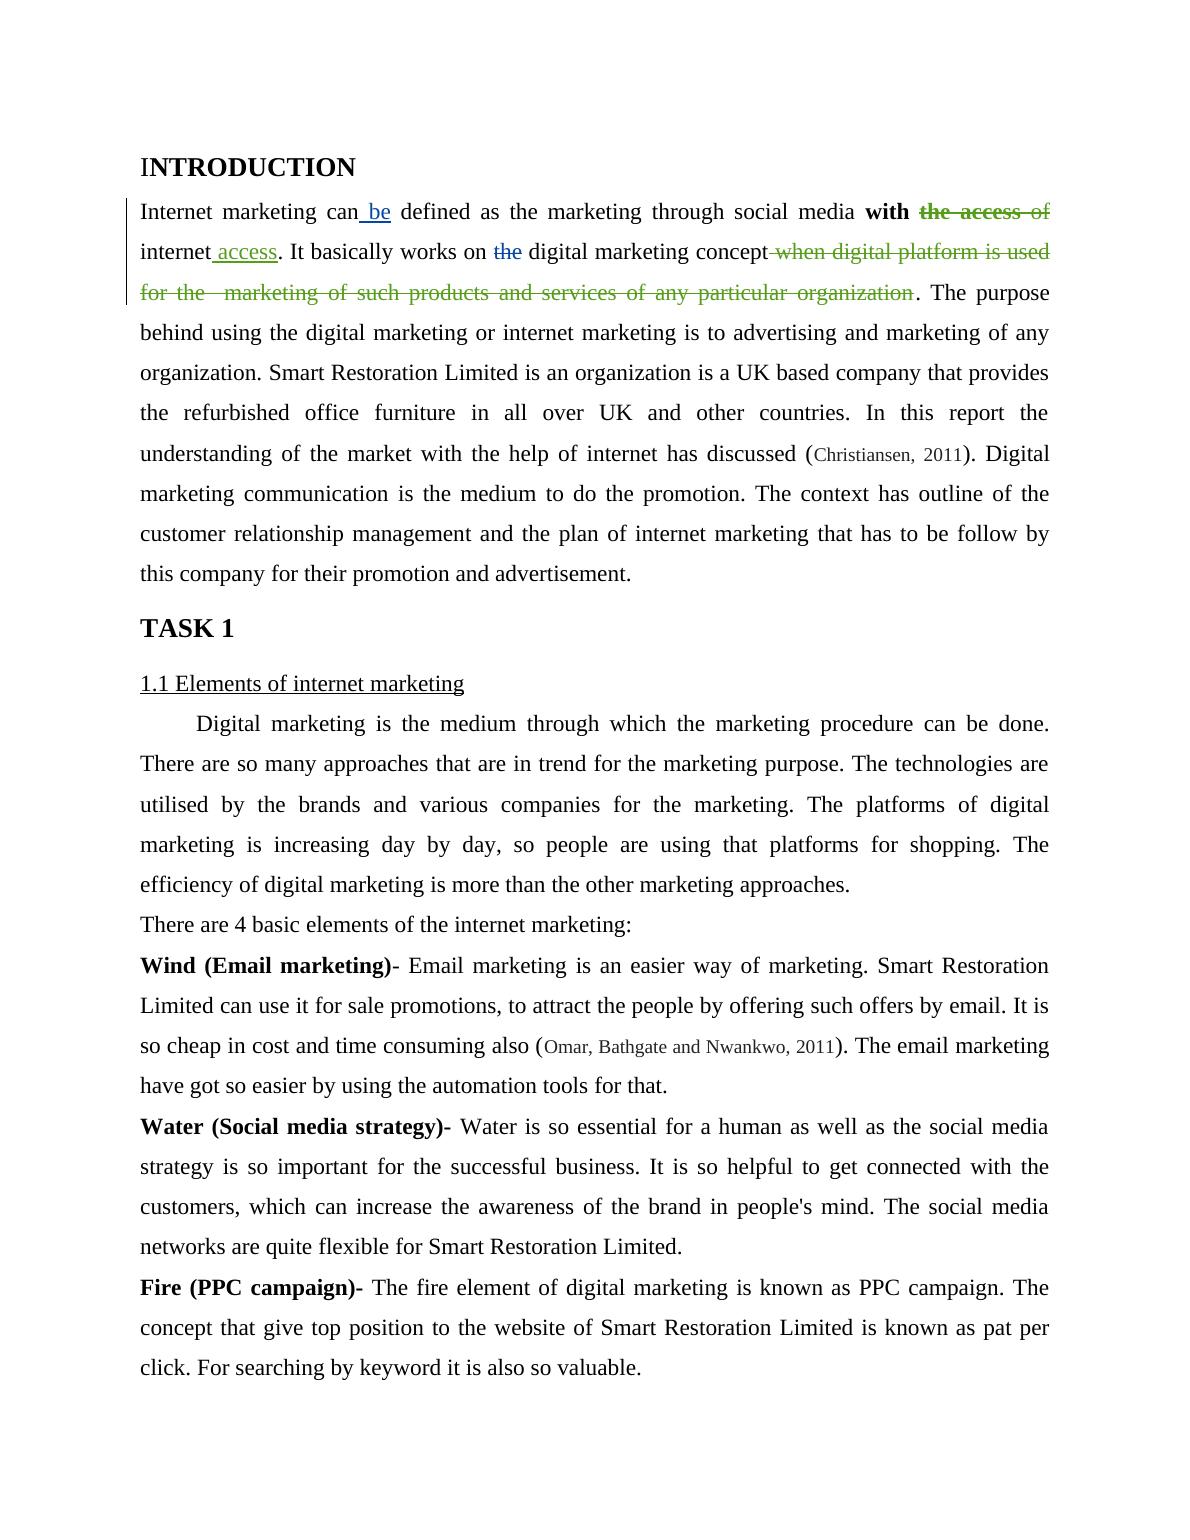 Digital Marketing of Smart Restoration Limited : Report_4